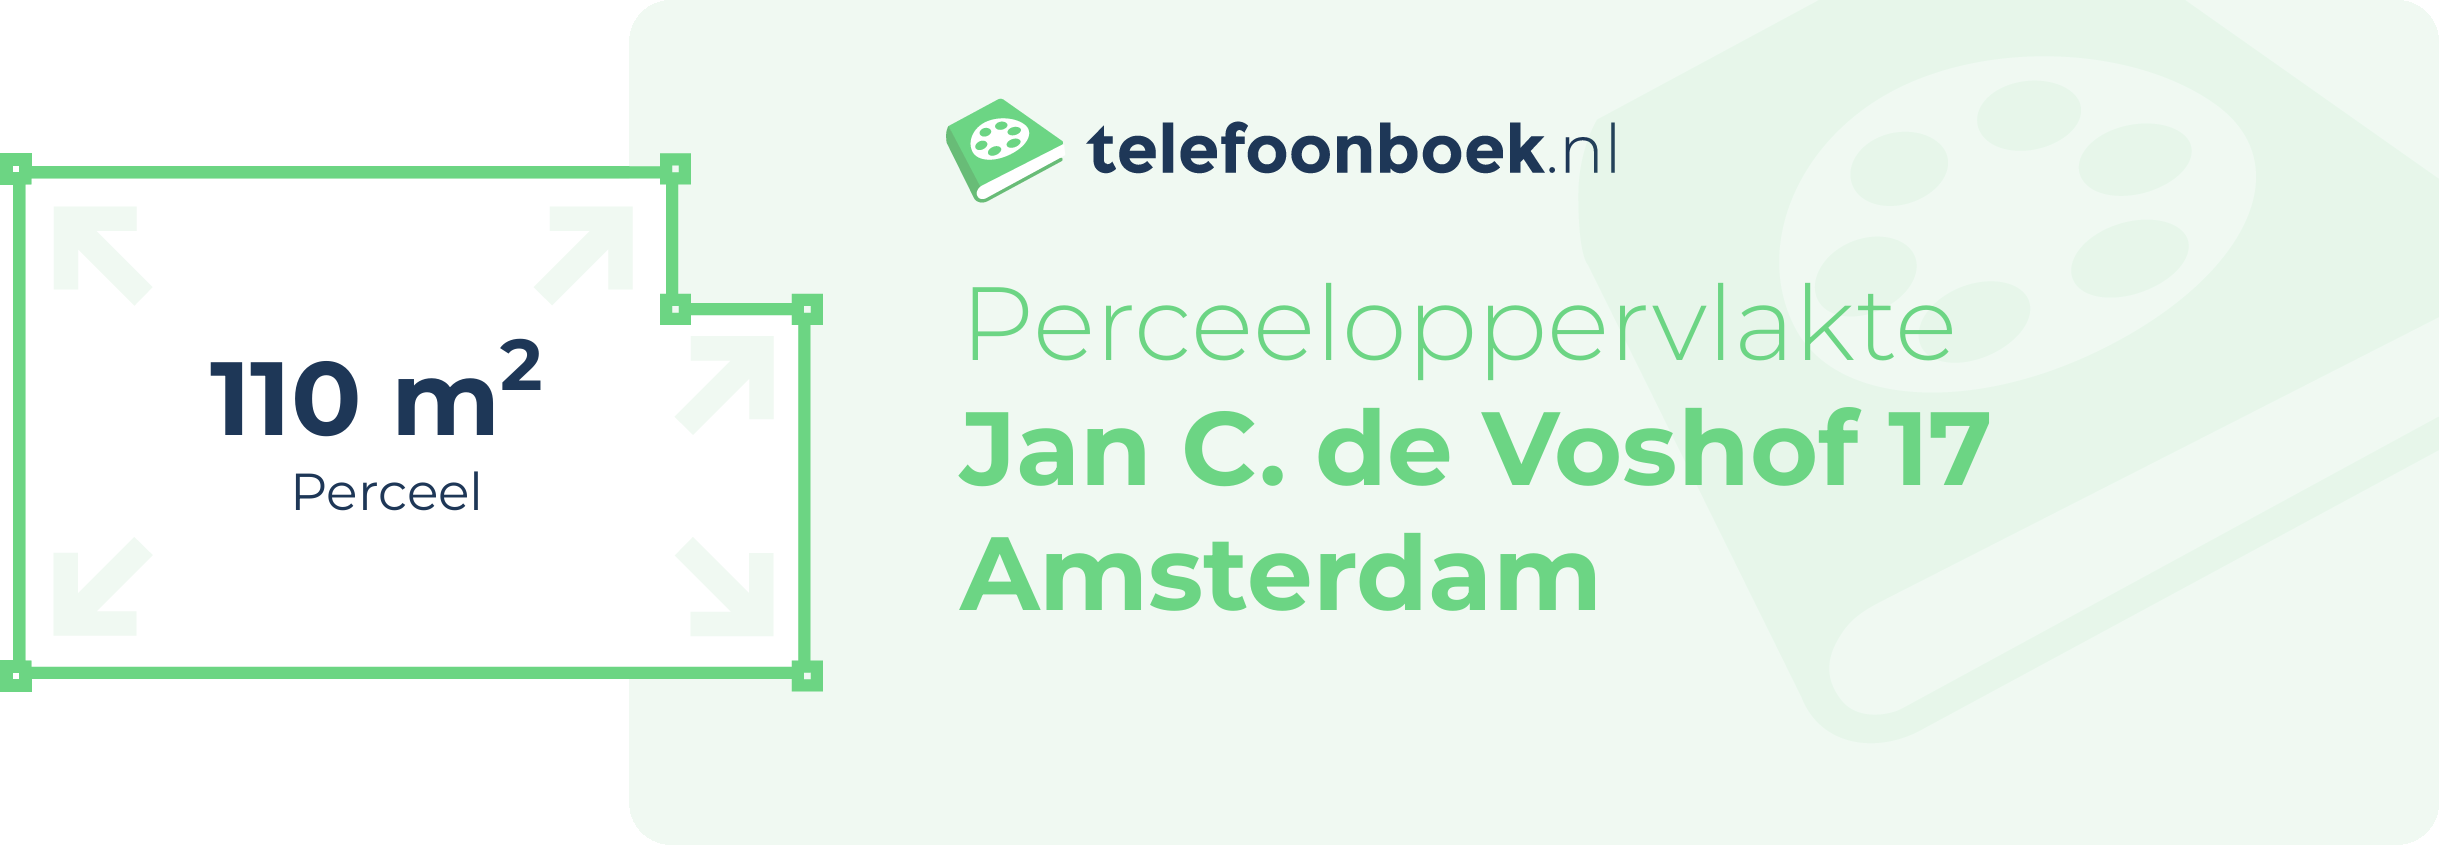 Perceeloppervlakte Jan C. De Voshof 17 Amsterdam